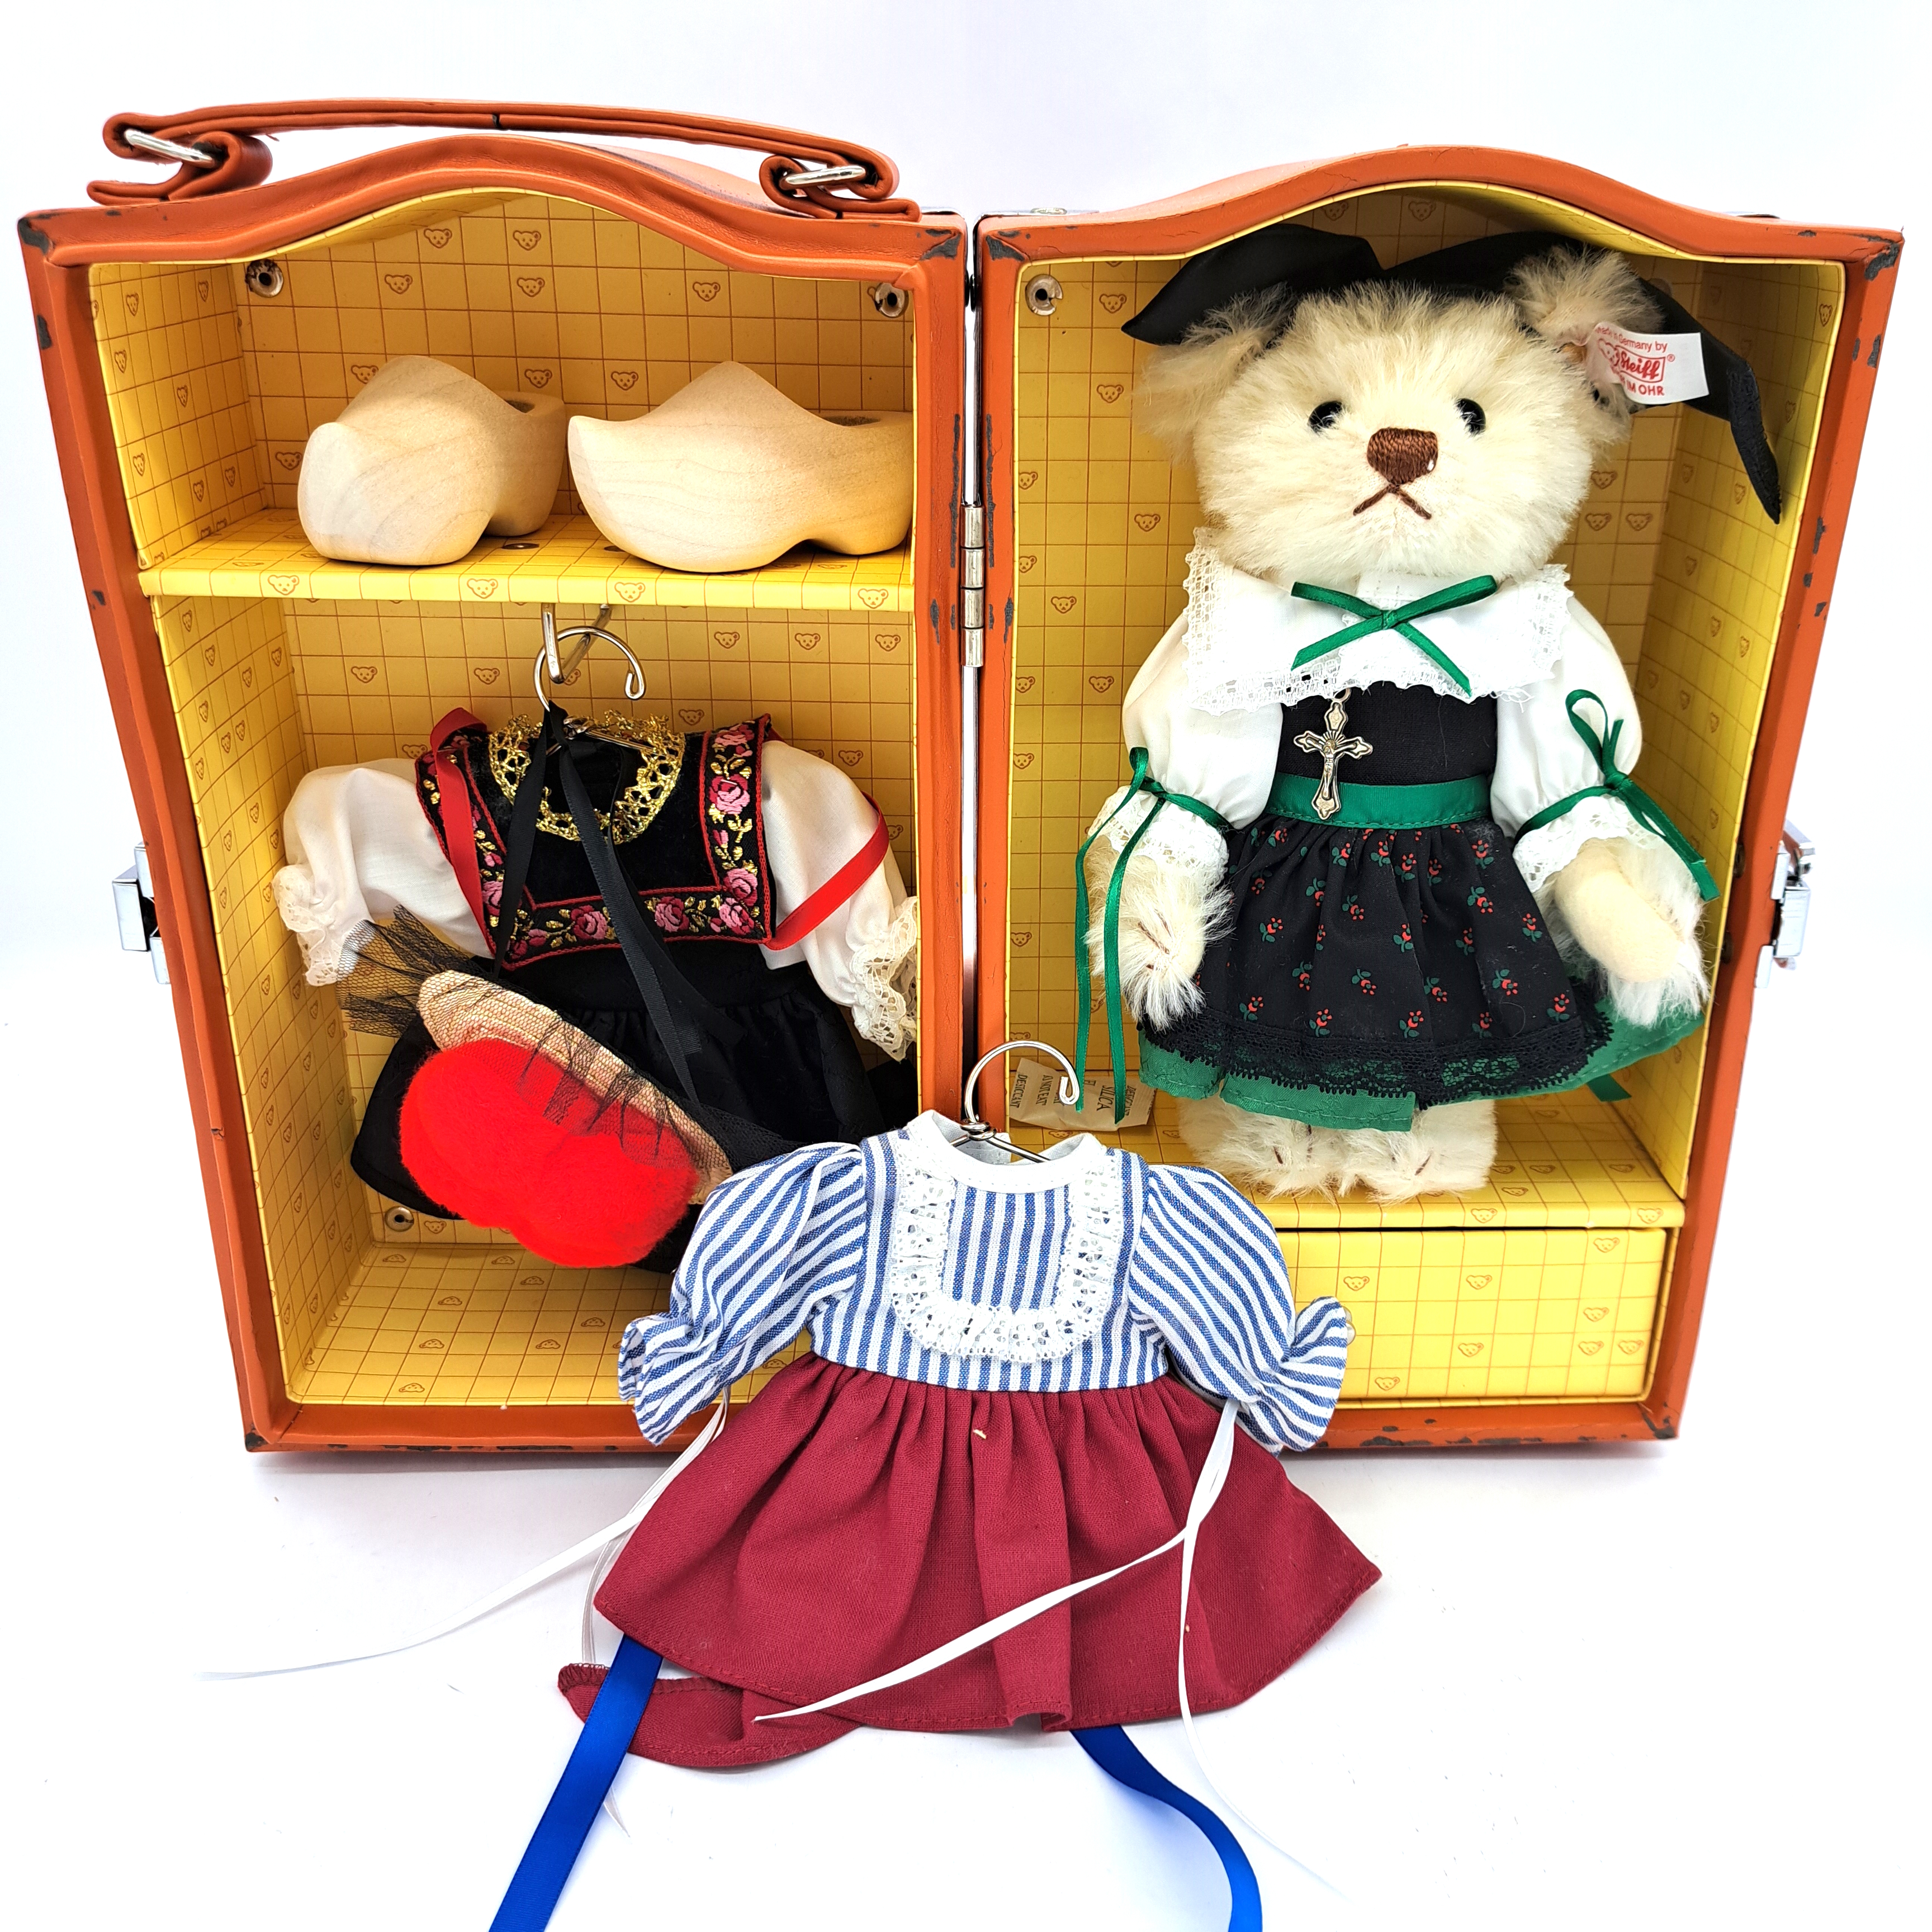 Steiff Licca Chan teddy bear, exclusive for Japan